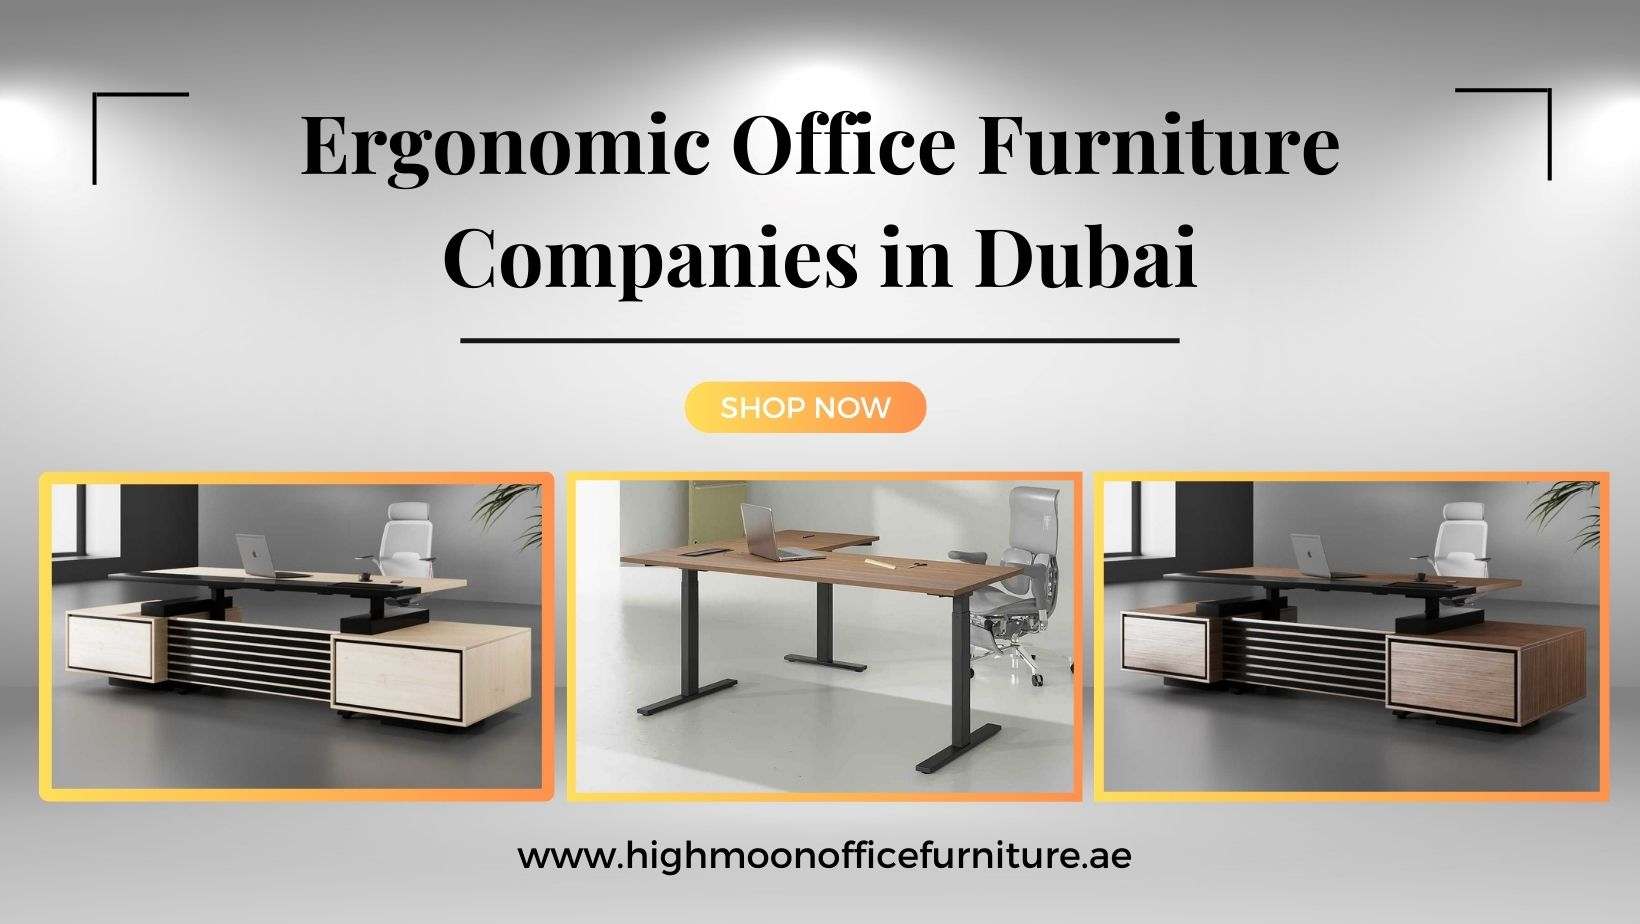 Ergonomic Office Furniture Companies in Dubai